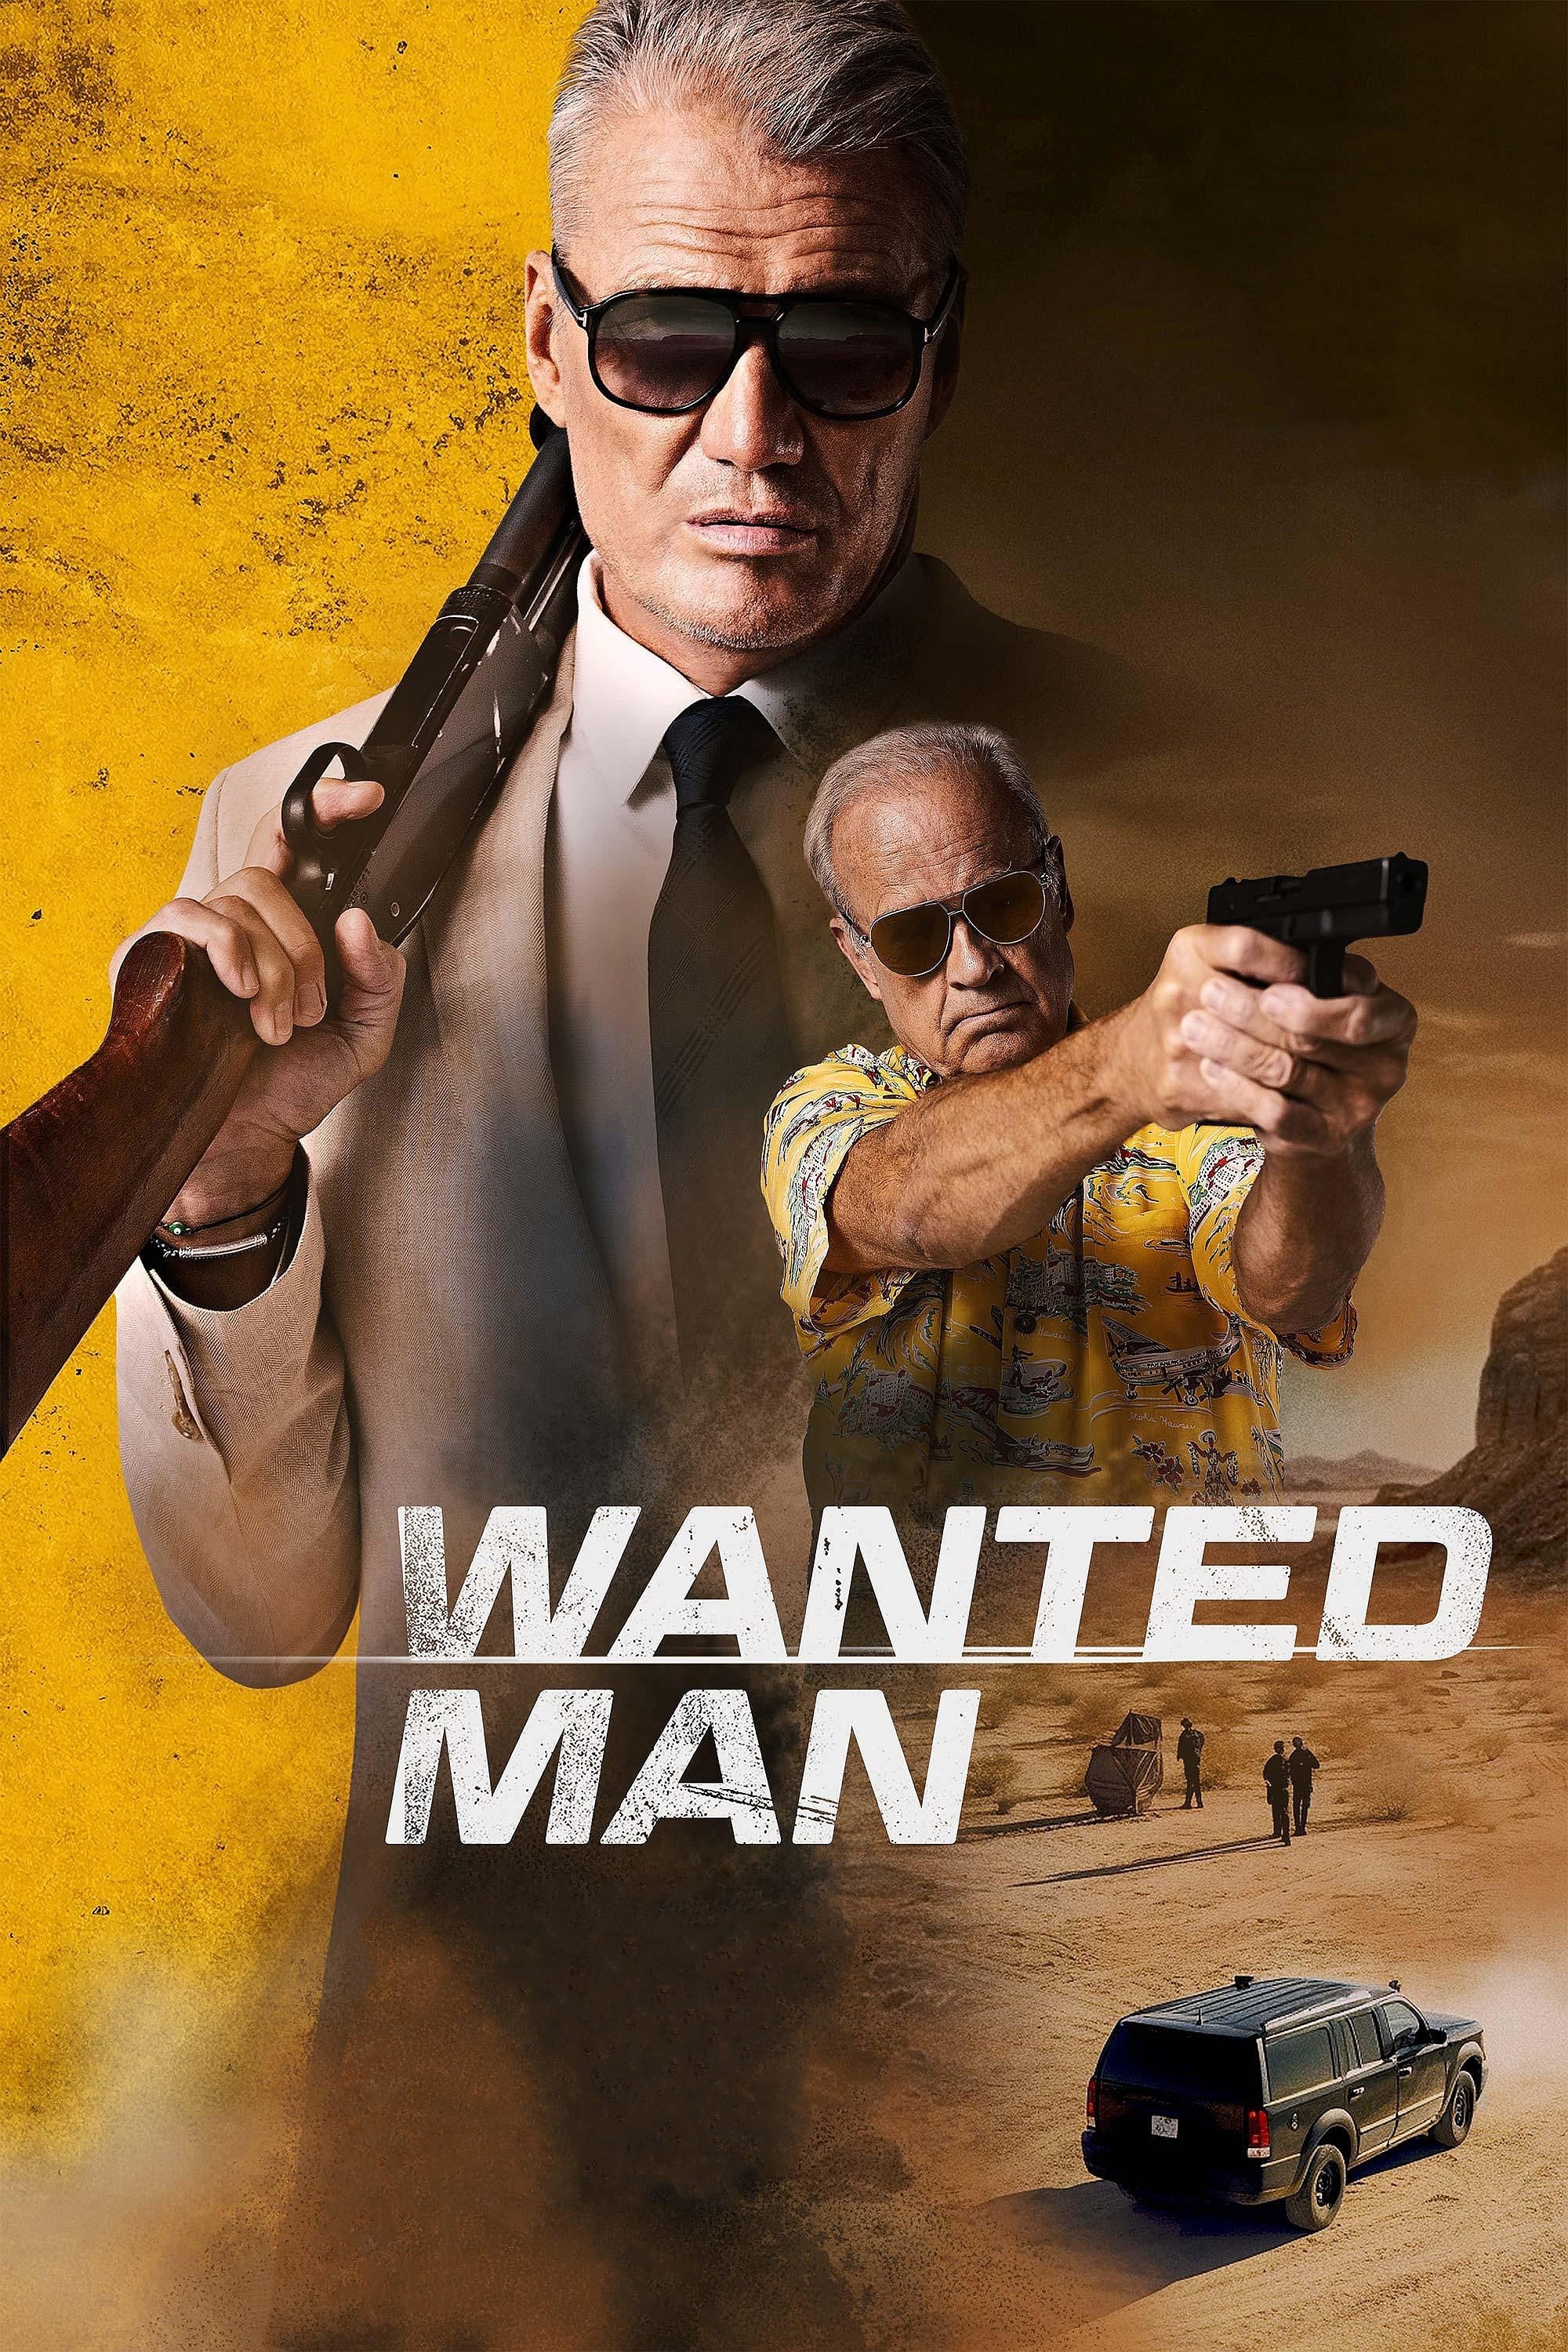 Wanted Man poster - indiq.net